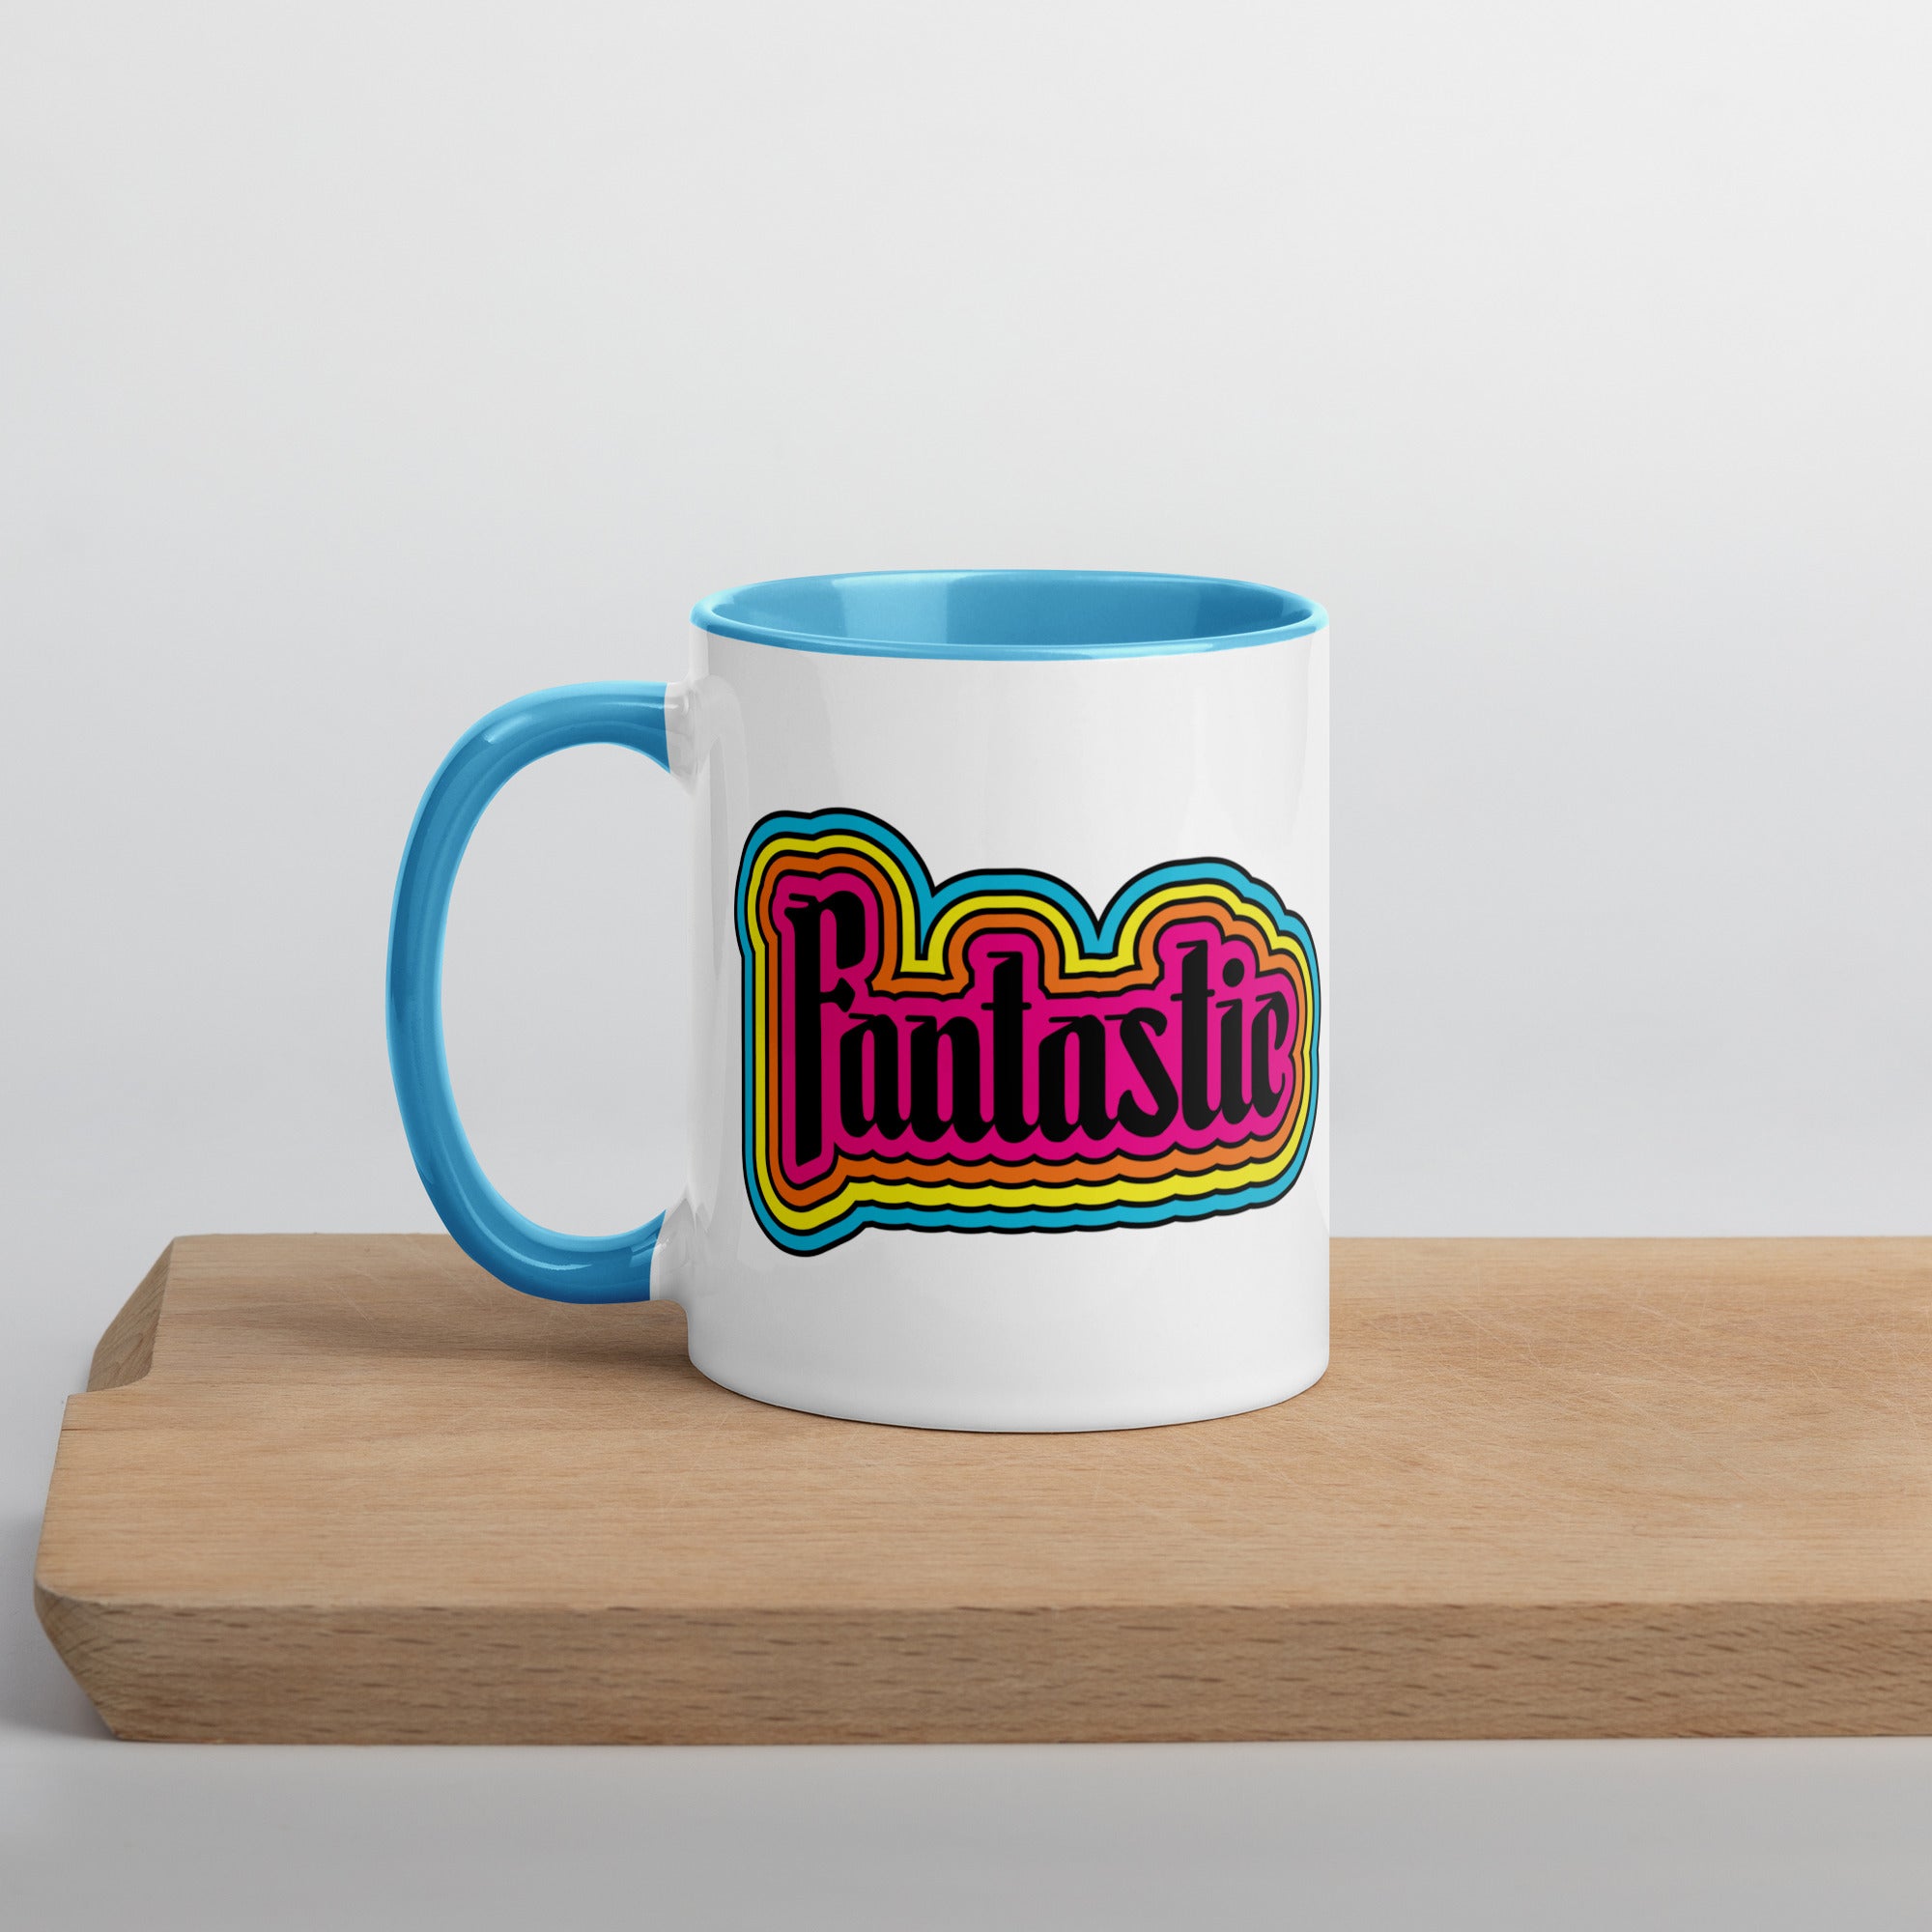 11 oz mug with the word fantastic with rainbow design around it